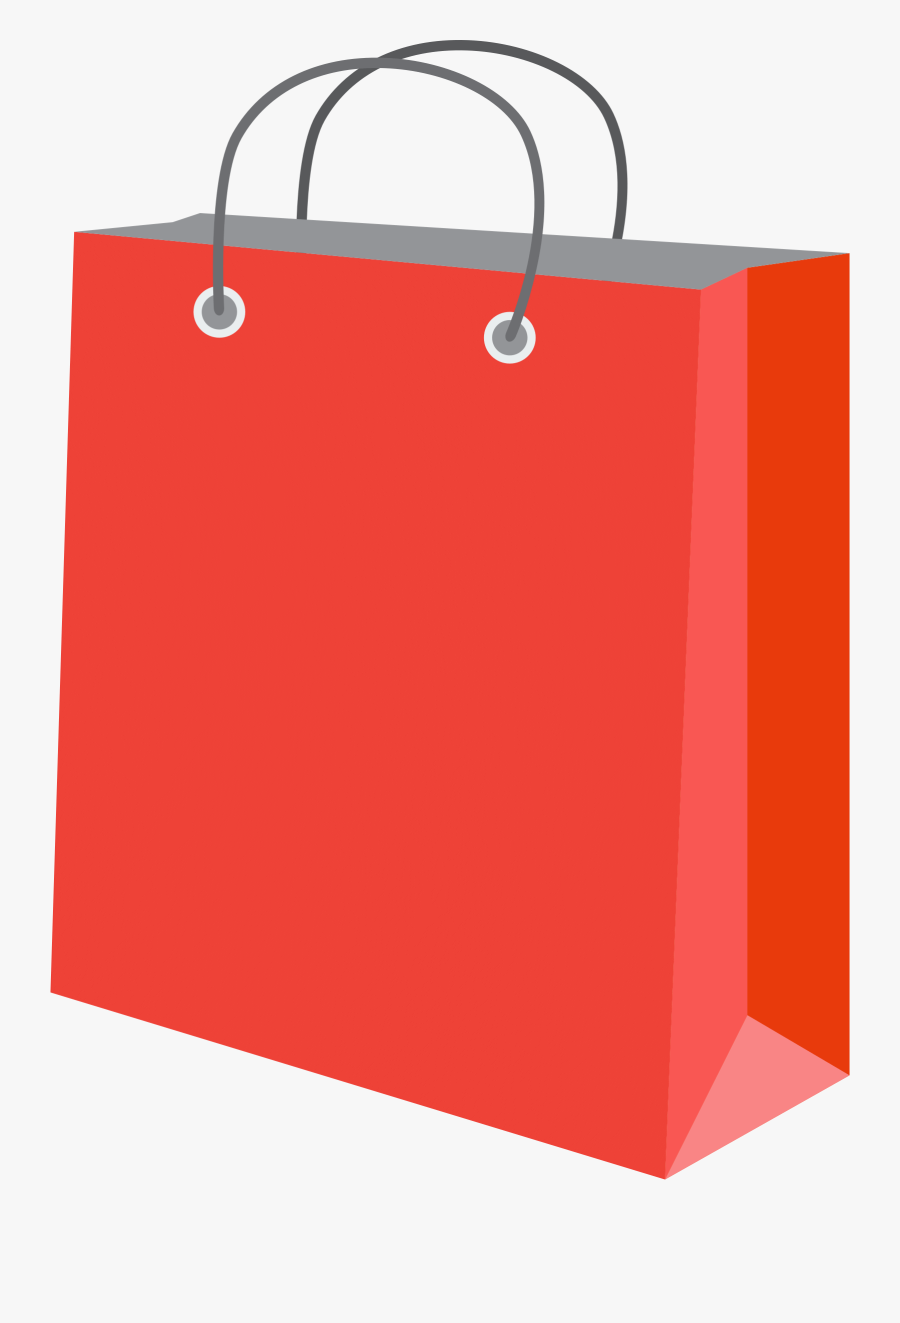 Carry Misc Boutique Paper Bag - Red Shopping Bag Clipart, Transparent Clipart